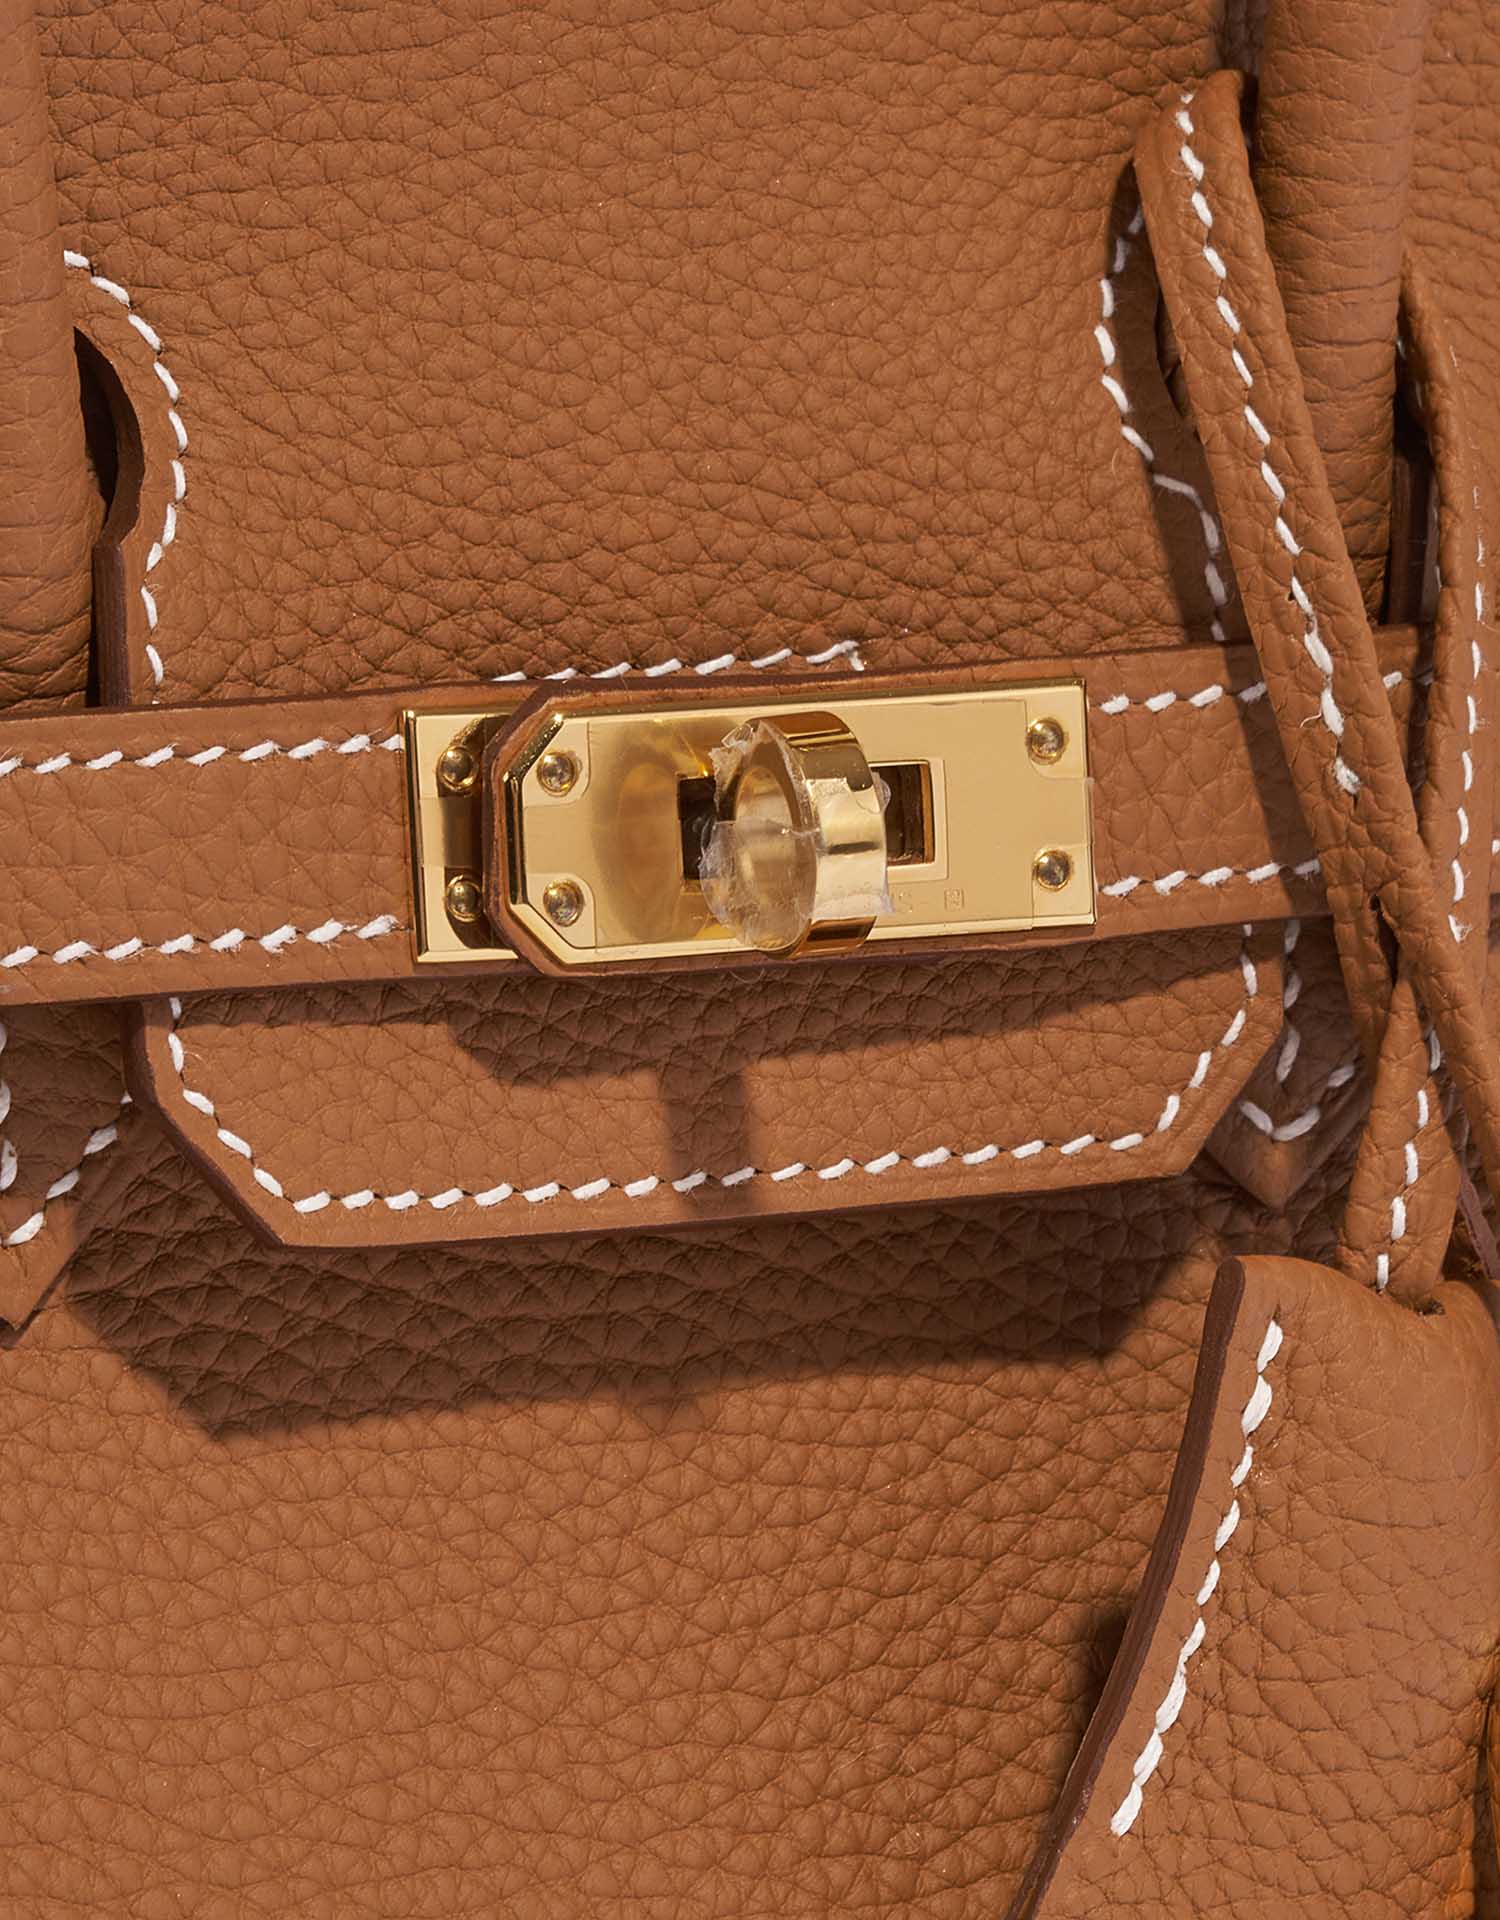 Hermes Birkin 25 Gold Togo Gold Hardware - Fashion Handbag Collections